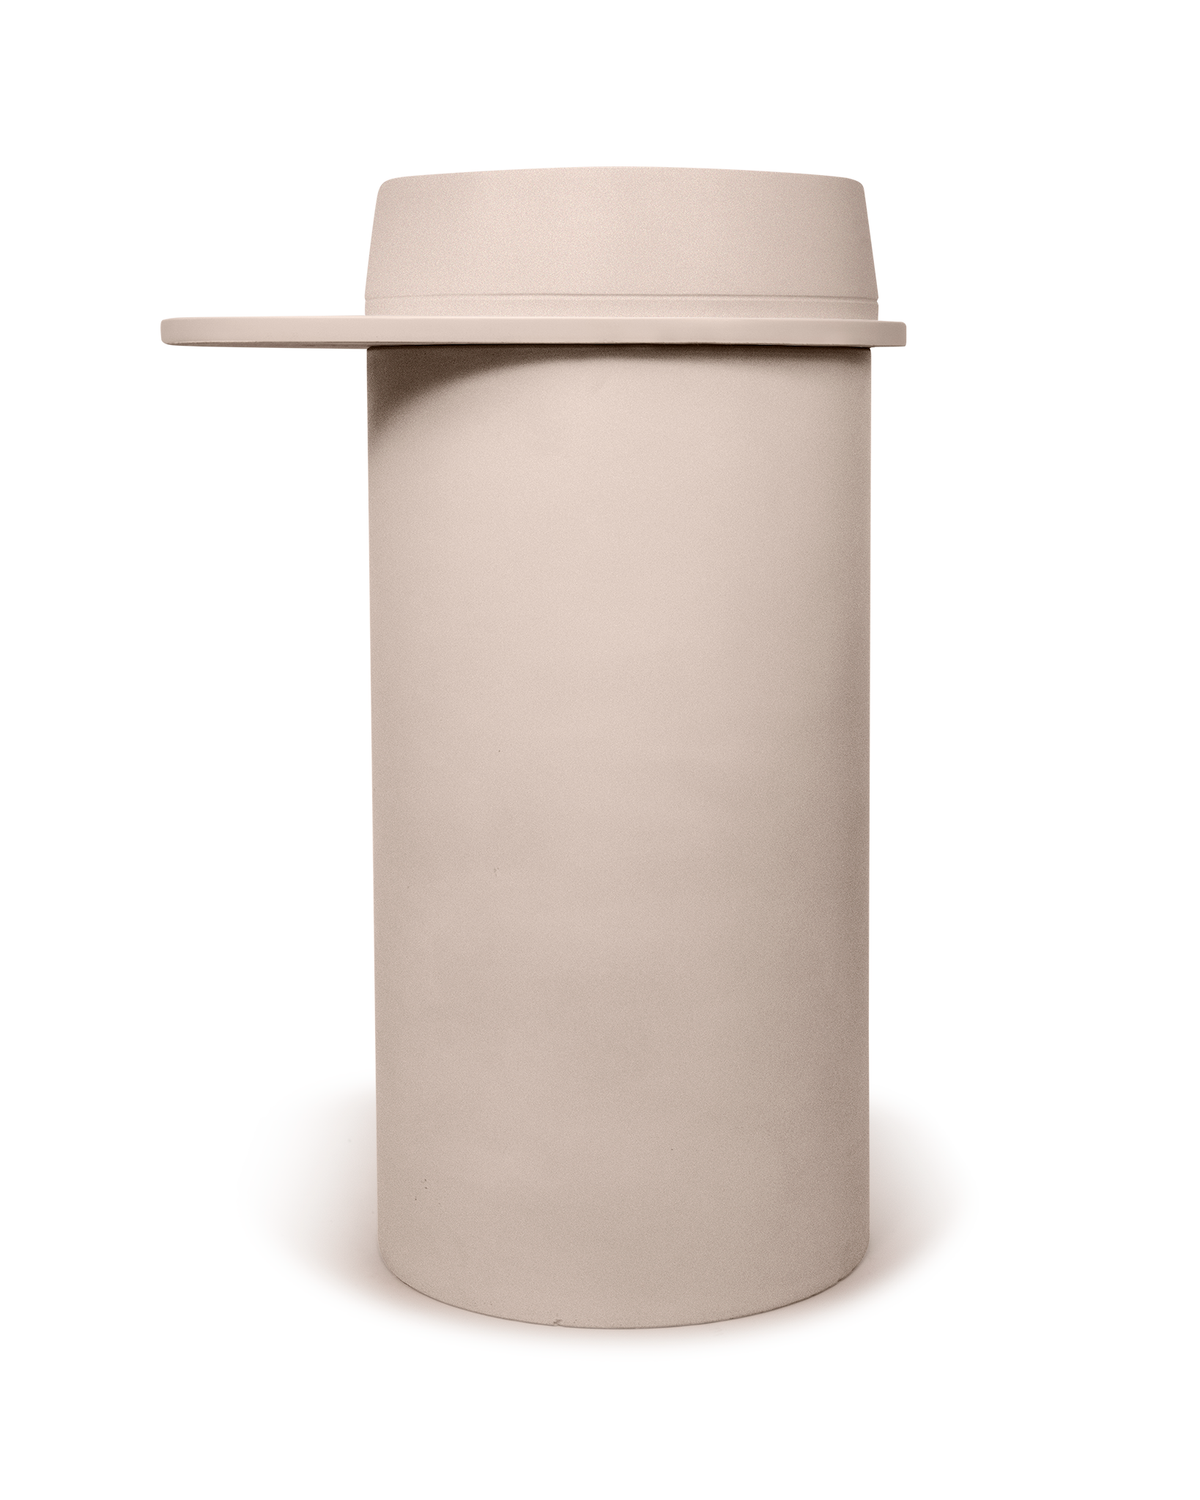 Cylinder - Funl Basin (Nood)